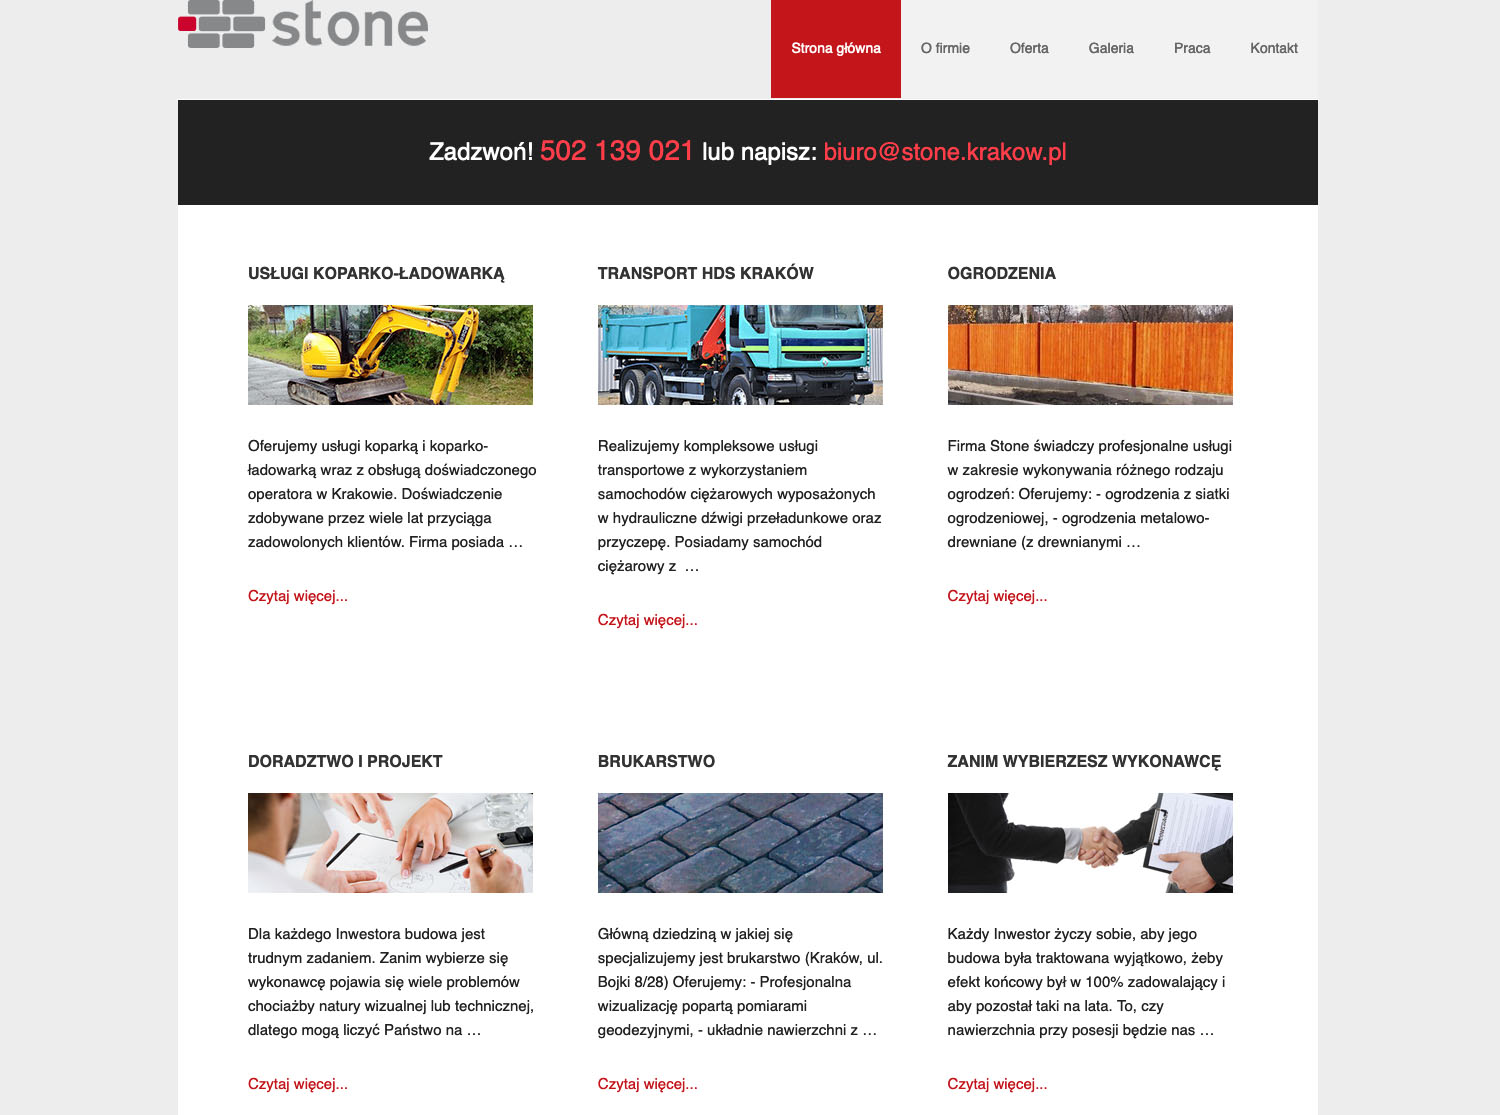 Krakowska firma Stone i transport HDS